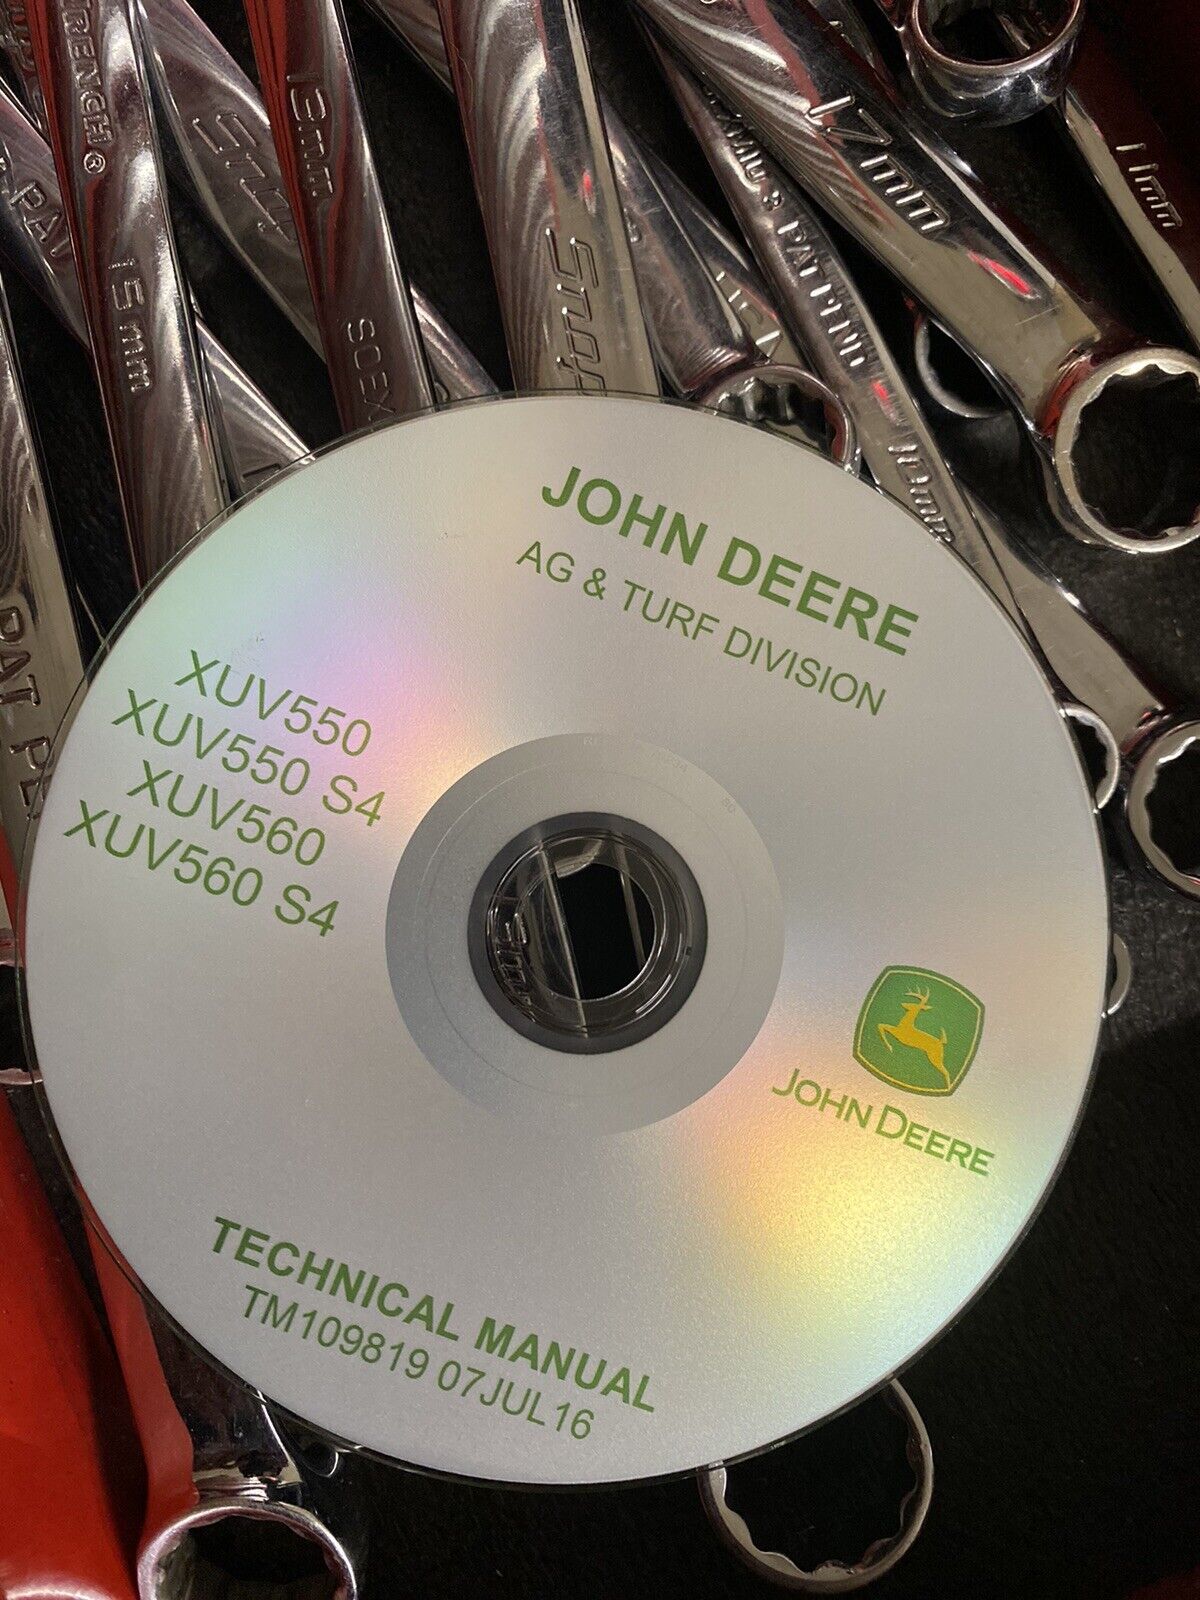 JOHN DEERE GATOR UTILITY XUV550 XUV560 / S4 550 560 Service Repair Manual CD